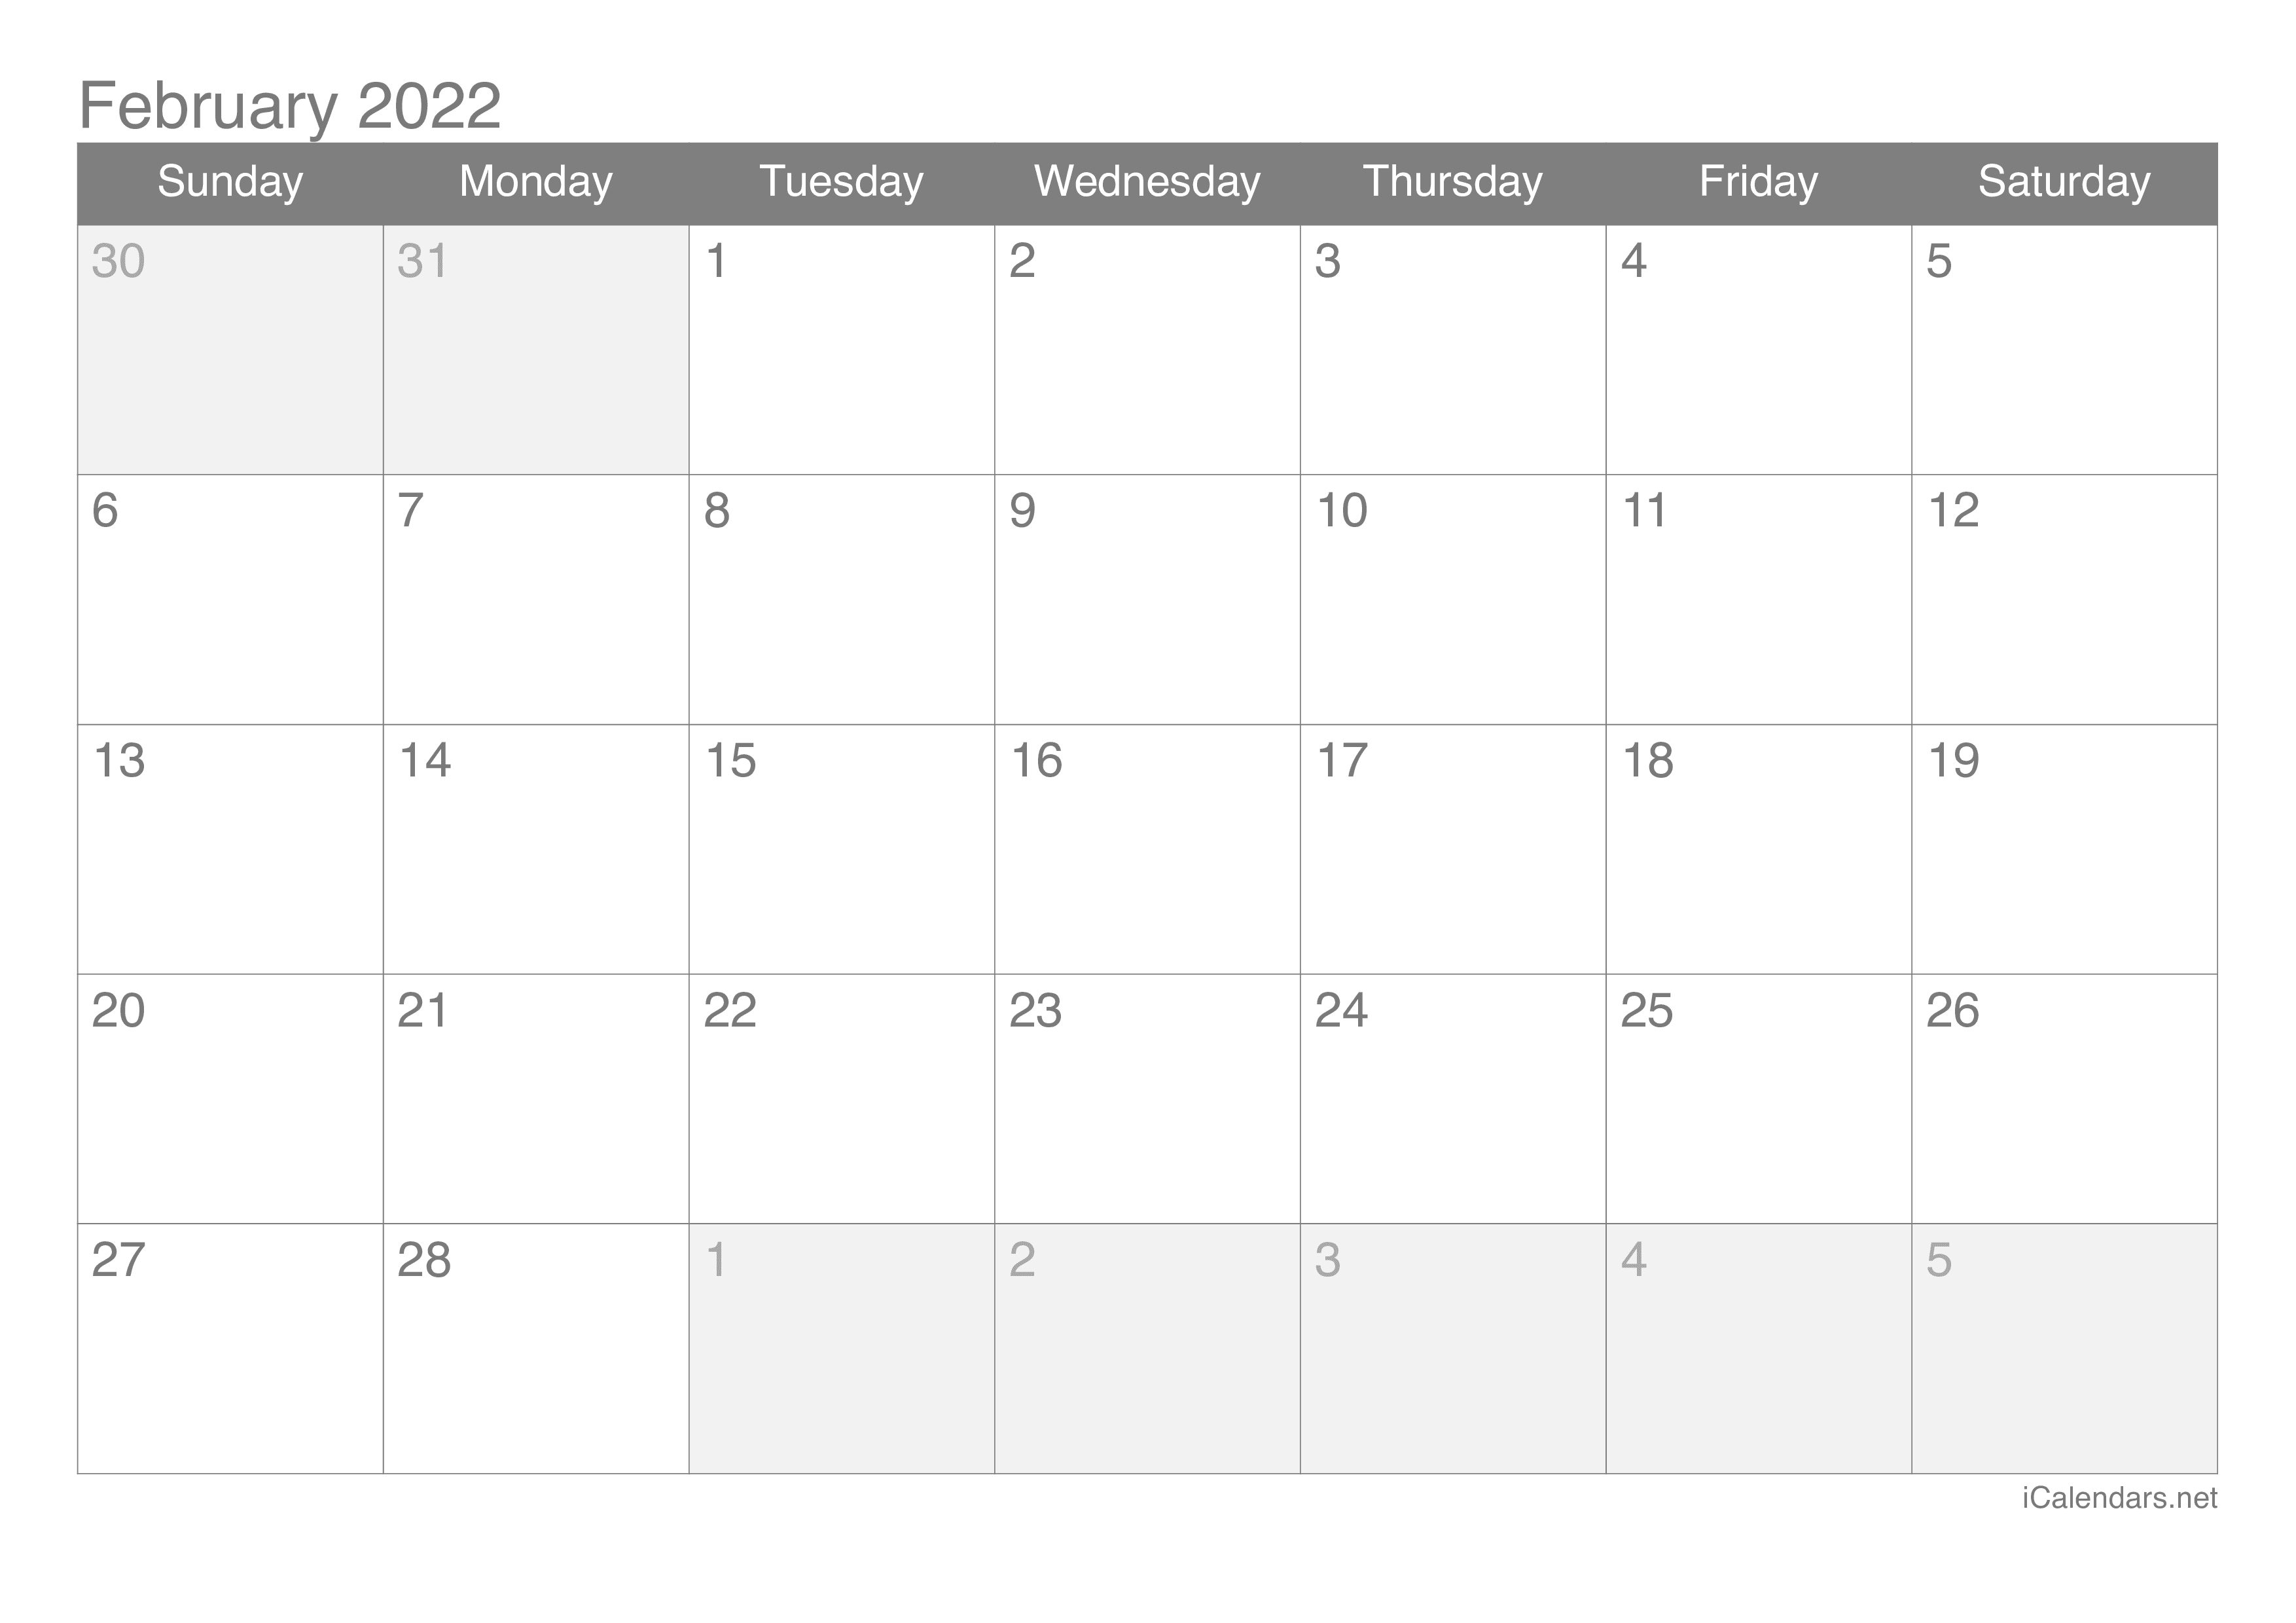 February 2022 Printable Calendar February 2022 Printable Calendar - Icalendars.net